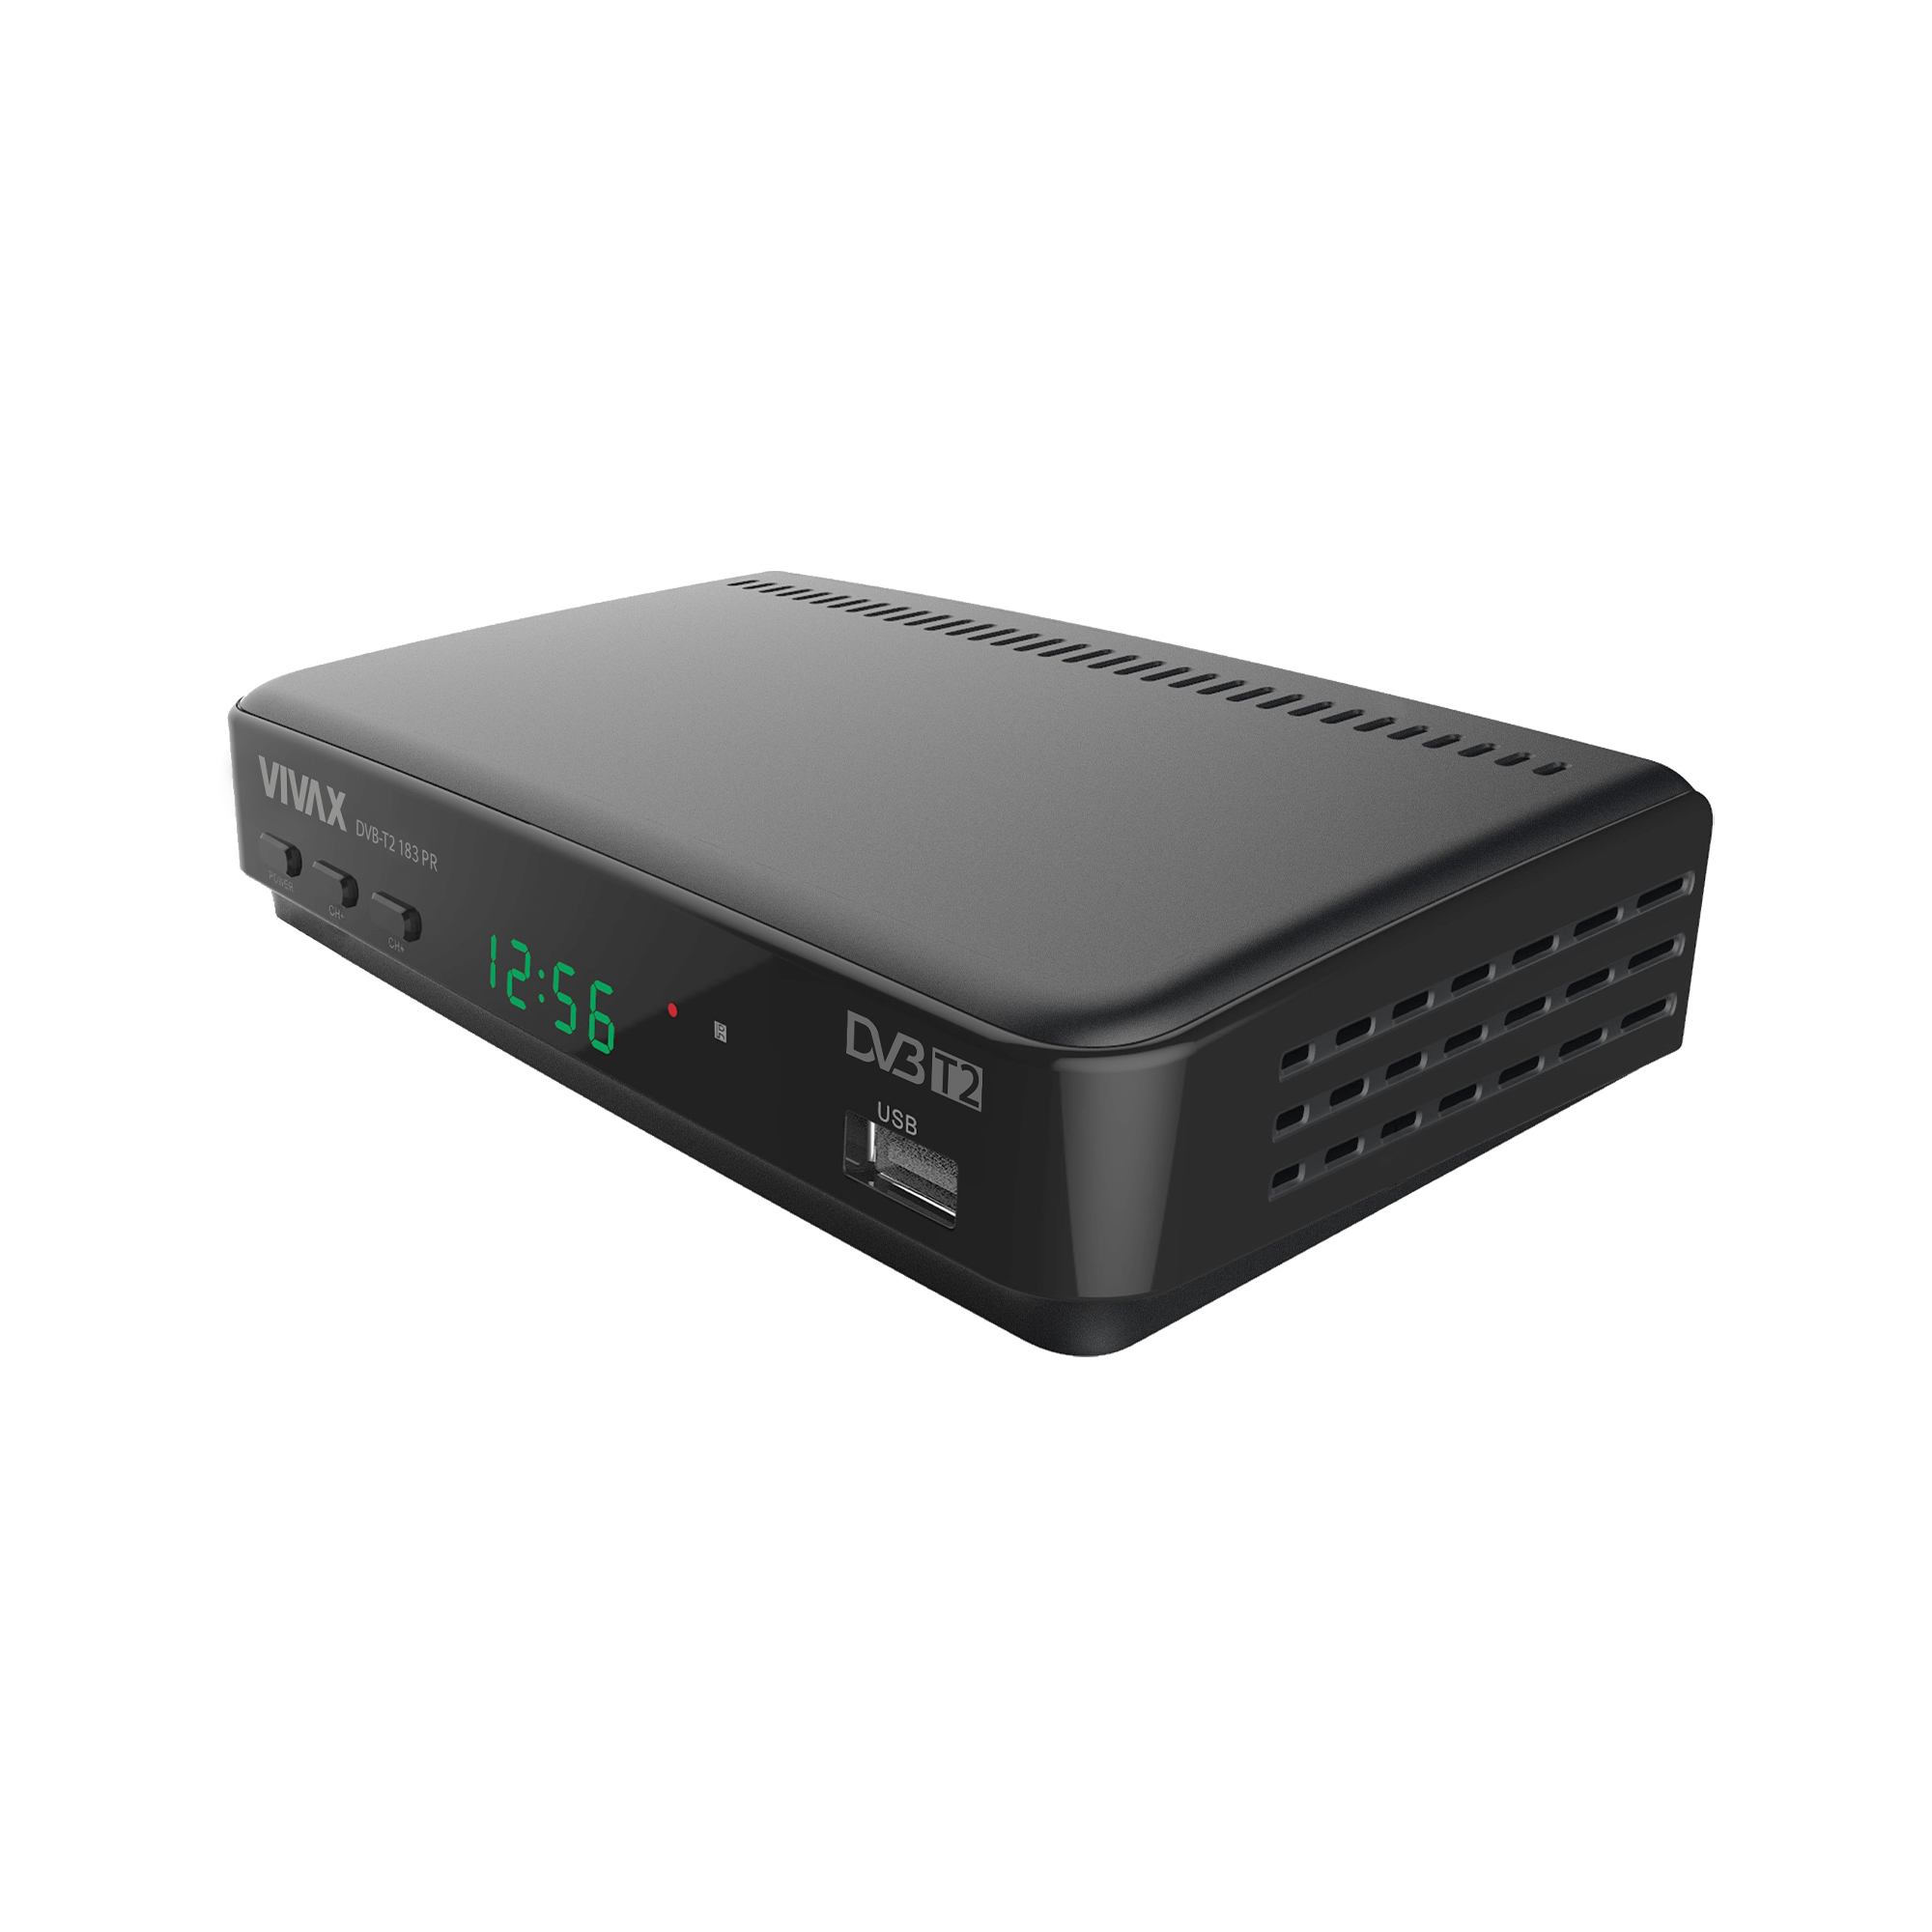 VIVAX Digital receiver DVB-T2 183 PR